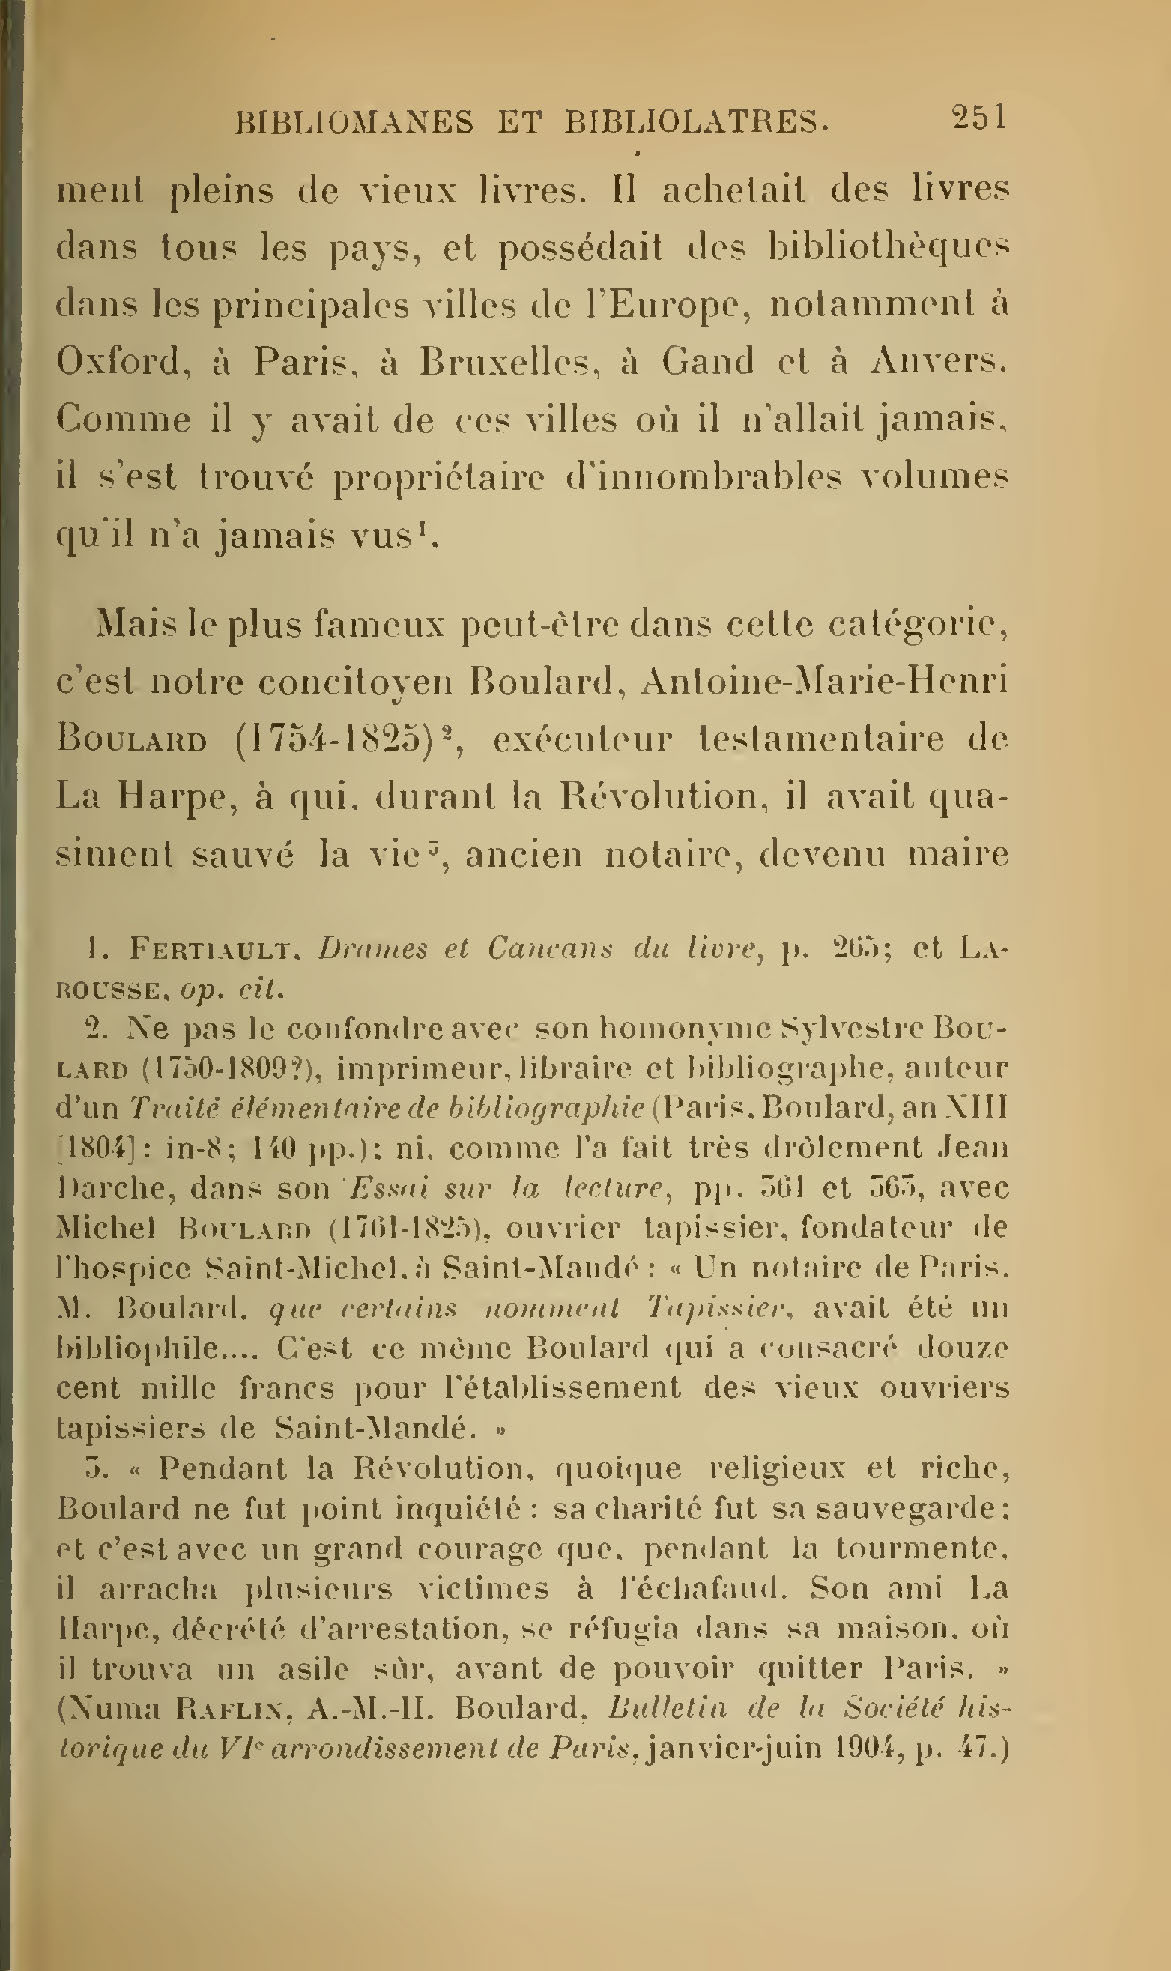 Albert Cim, Le Livre, t. II, p. 251.